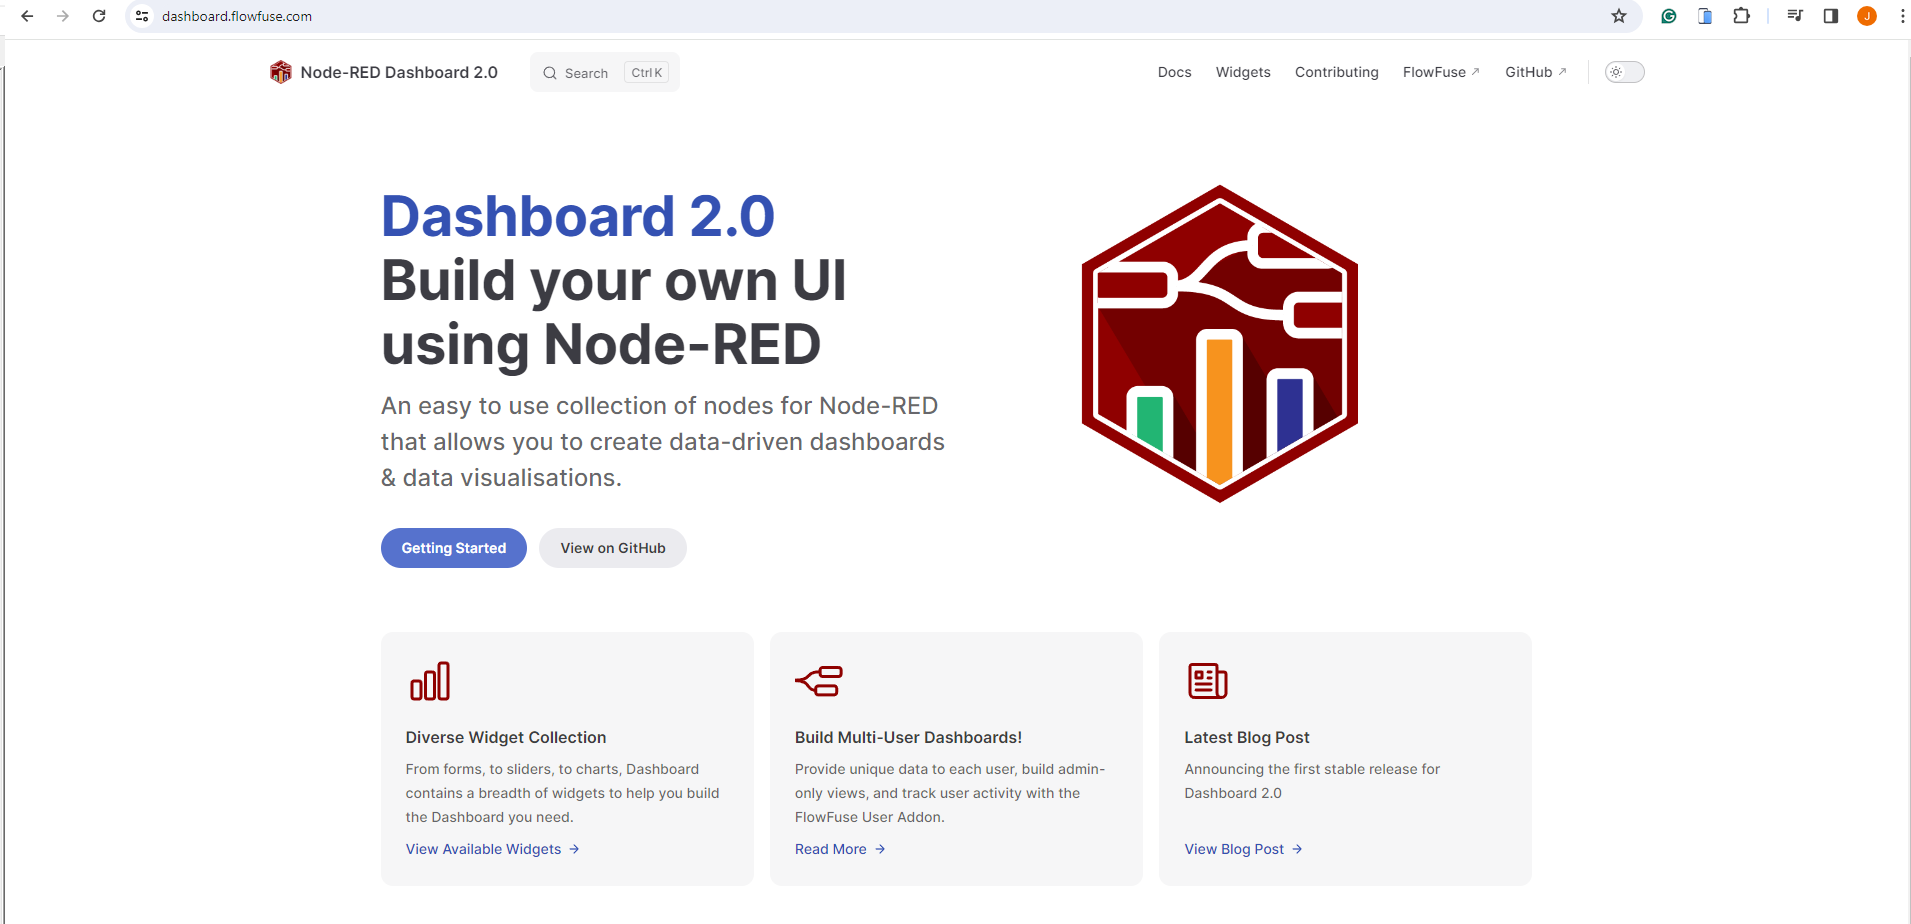 FlowFuse Node-Red Dashboard 2.0